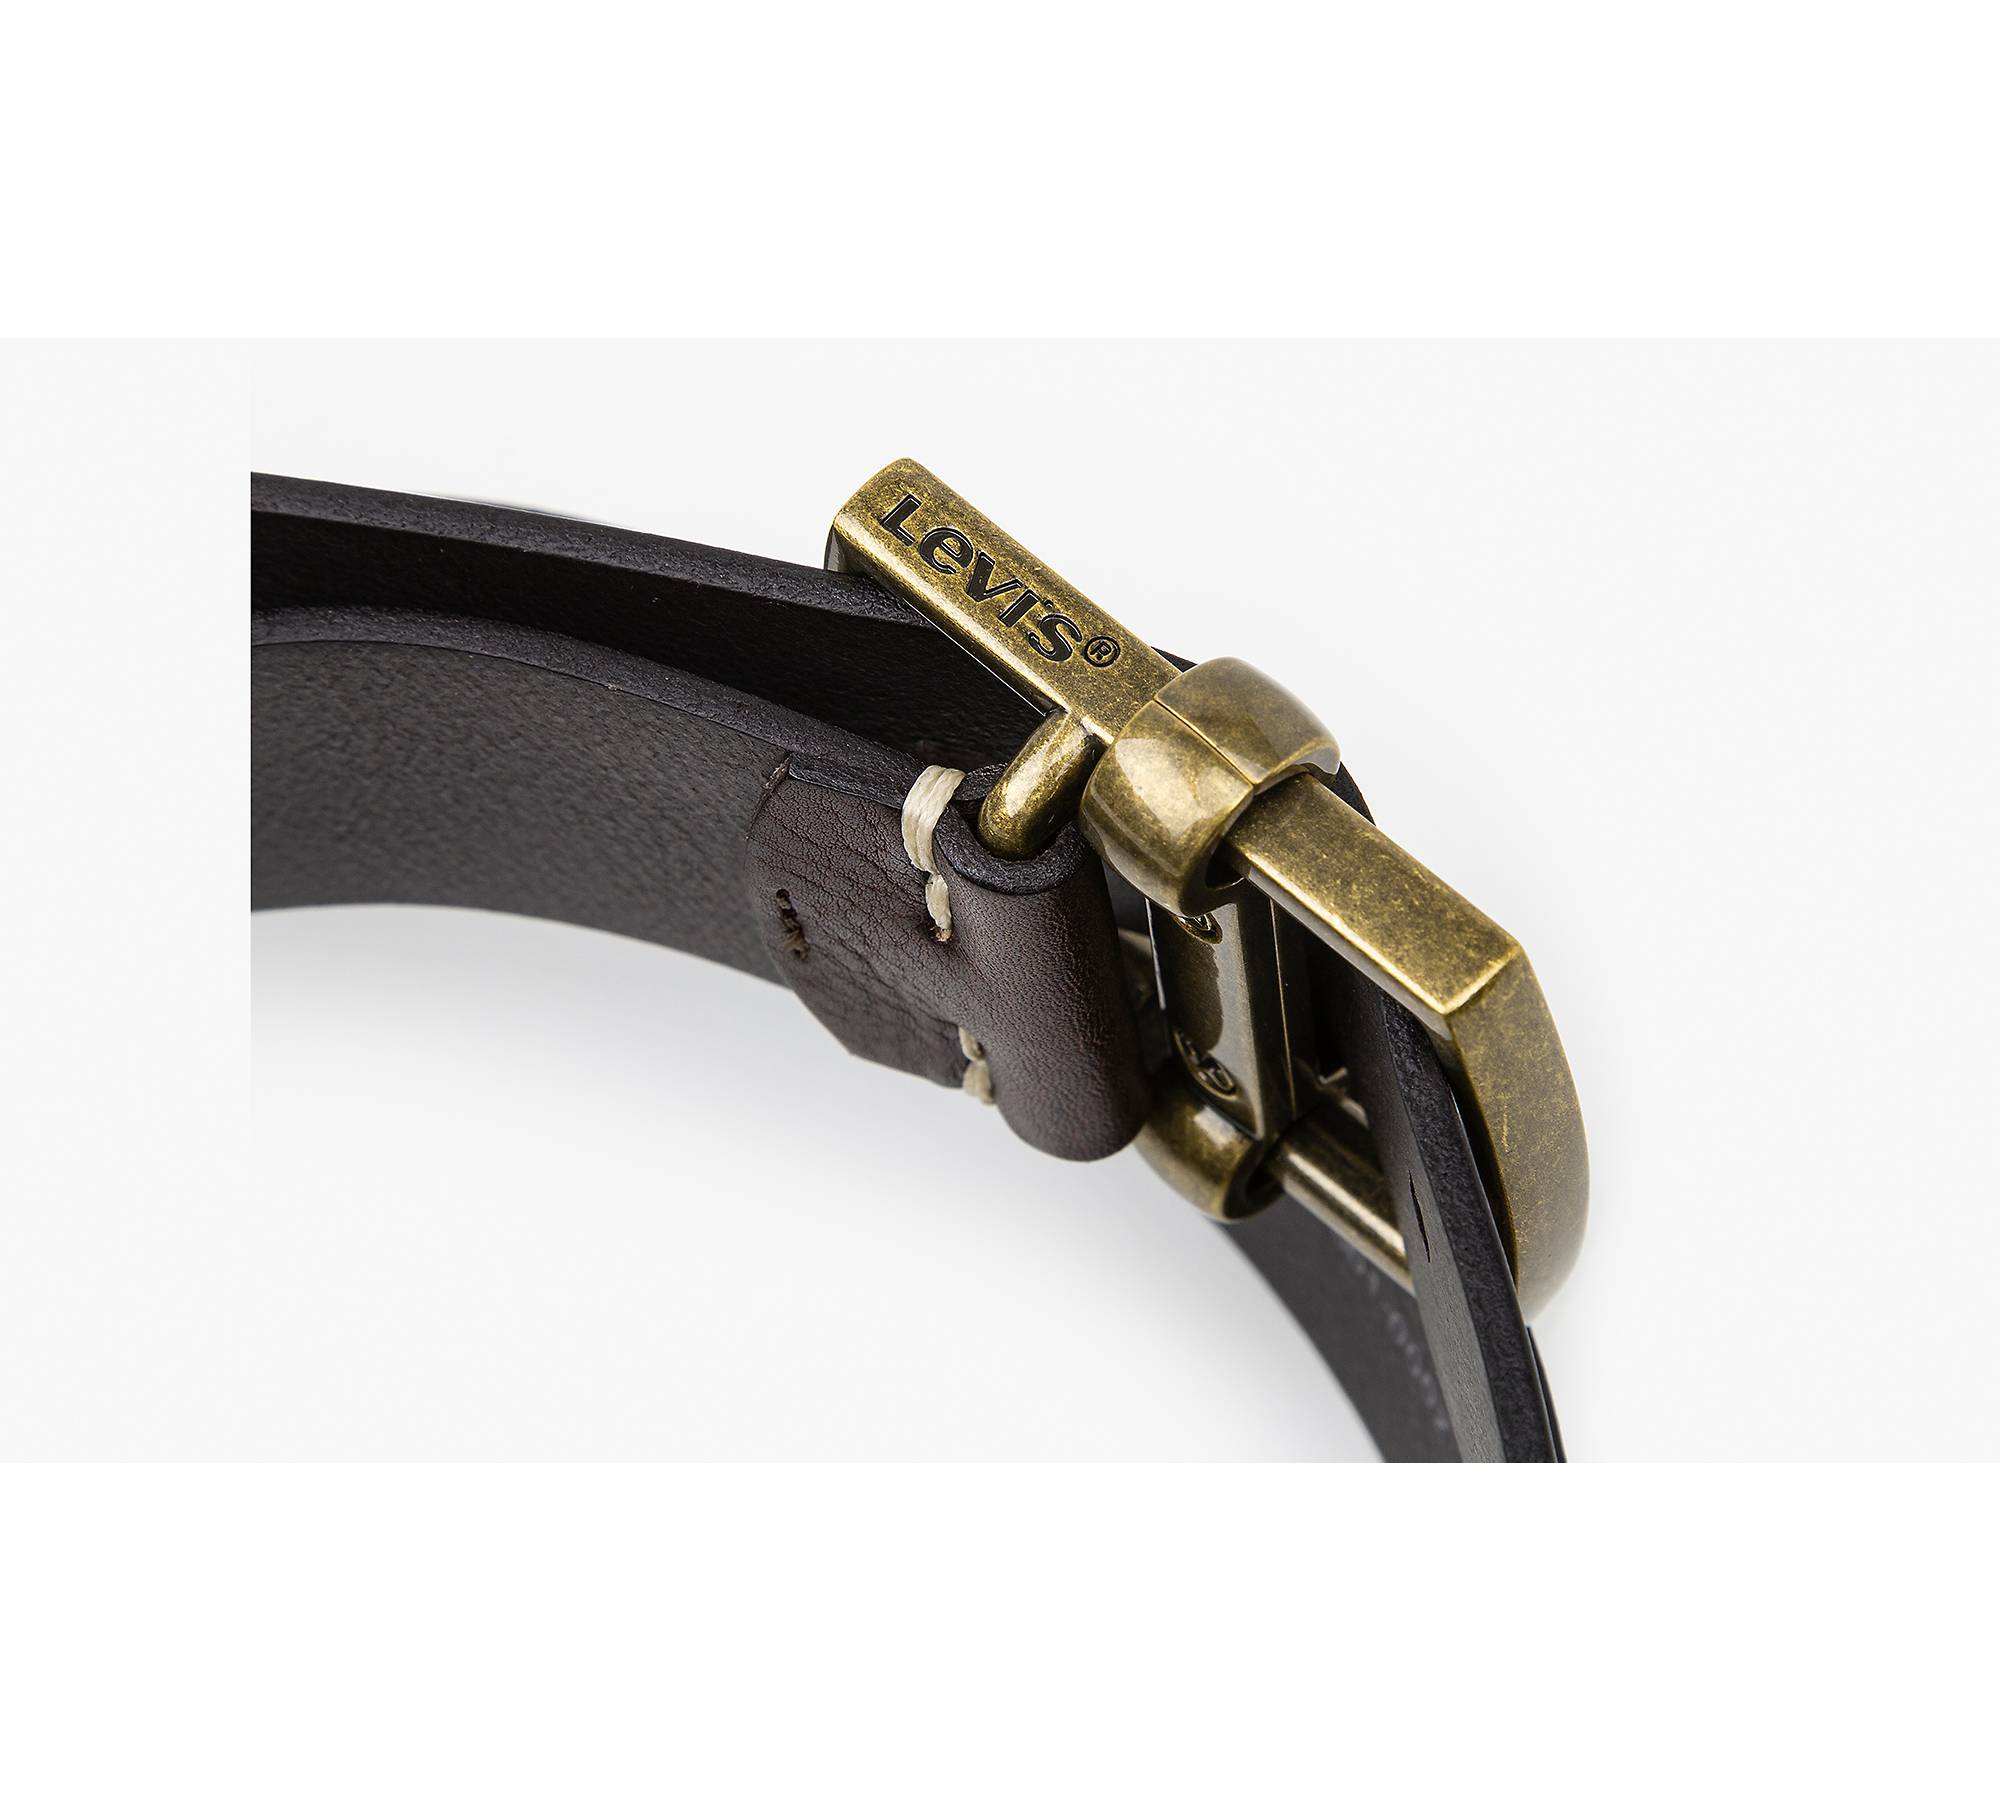 Center Bar Buckle Leather Belt